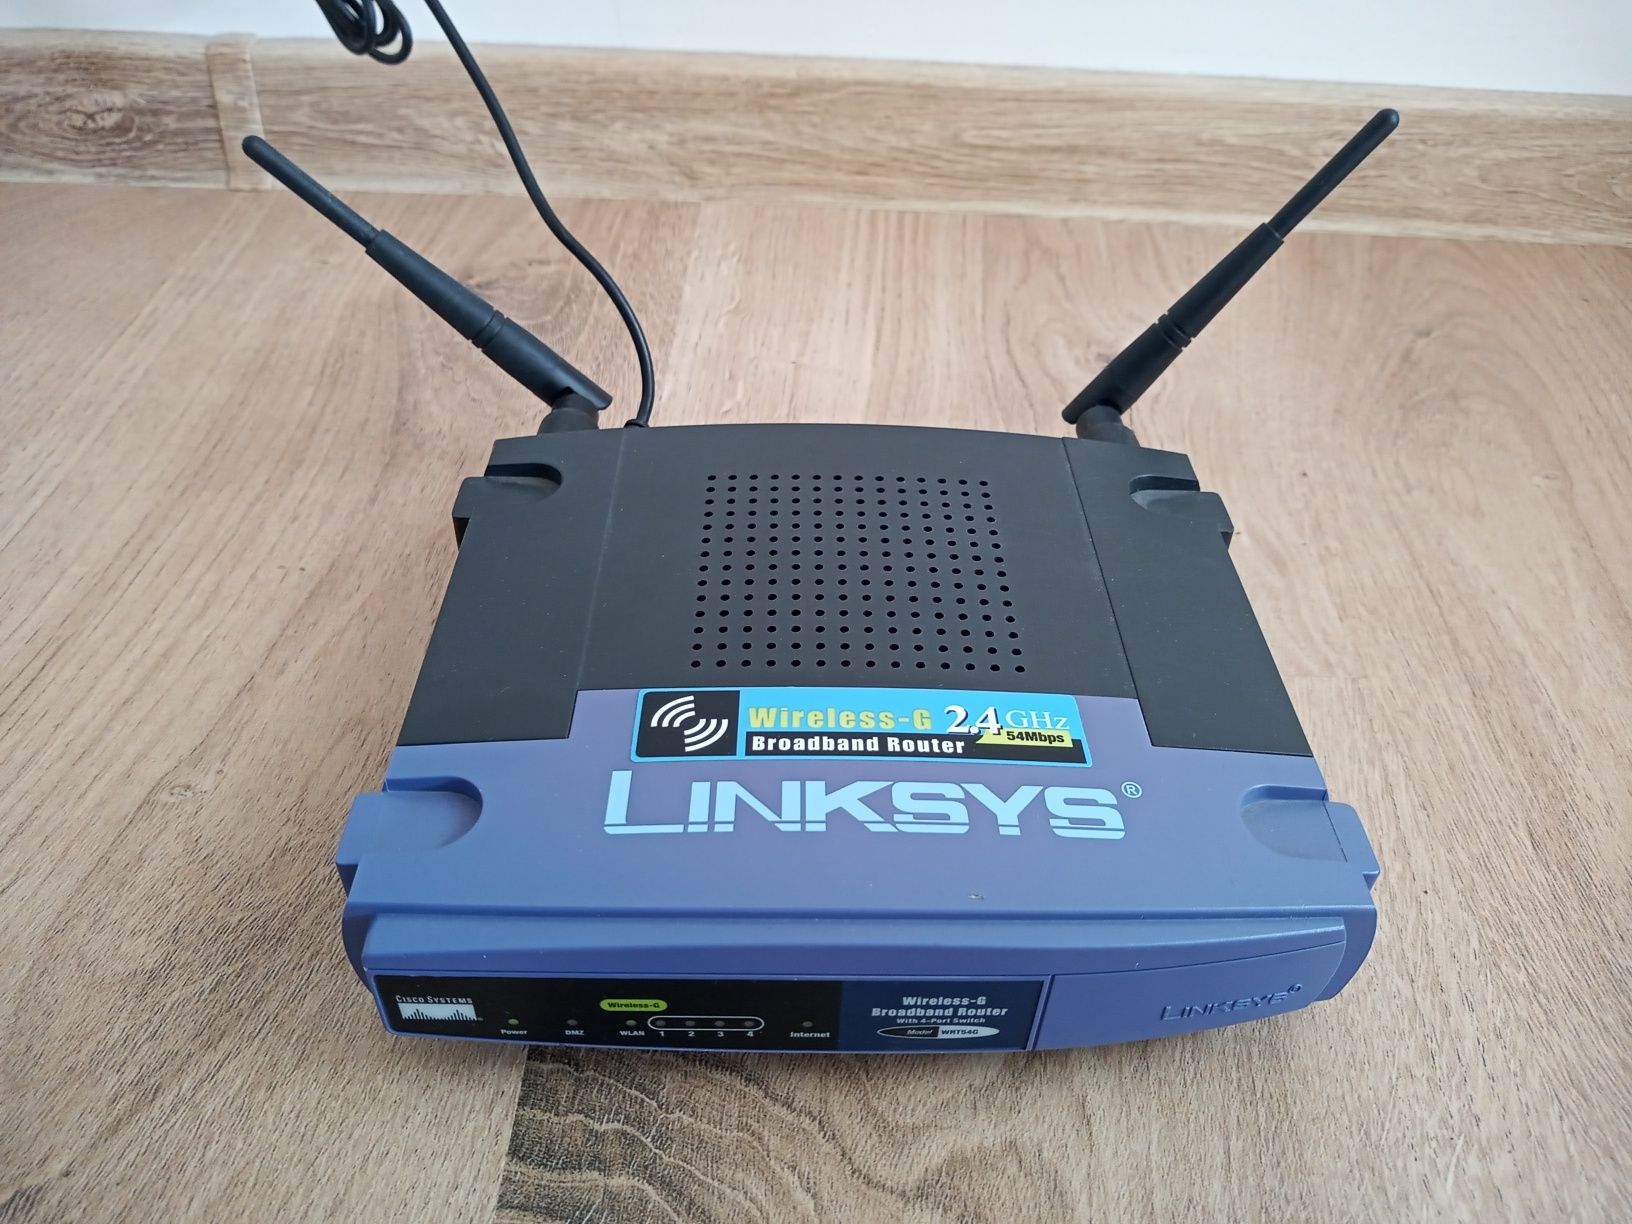 Router WiFi Linksys WRT54G Wireless-G